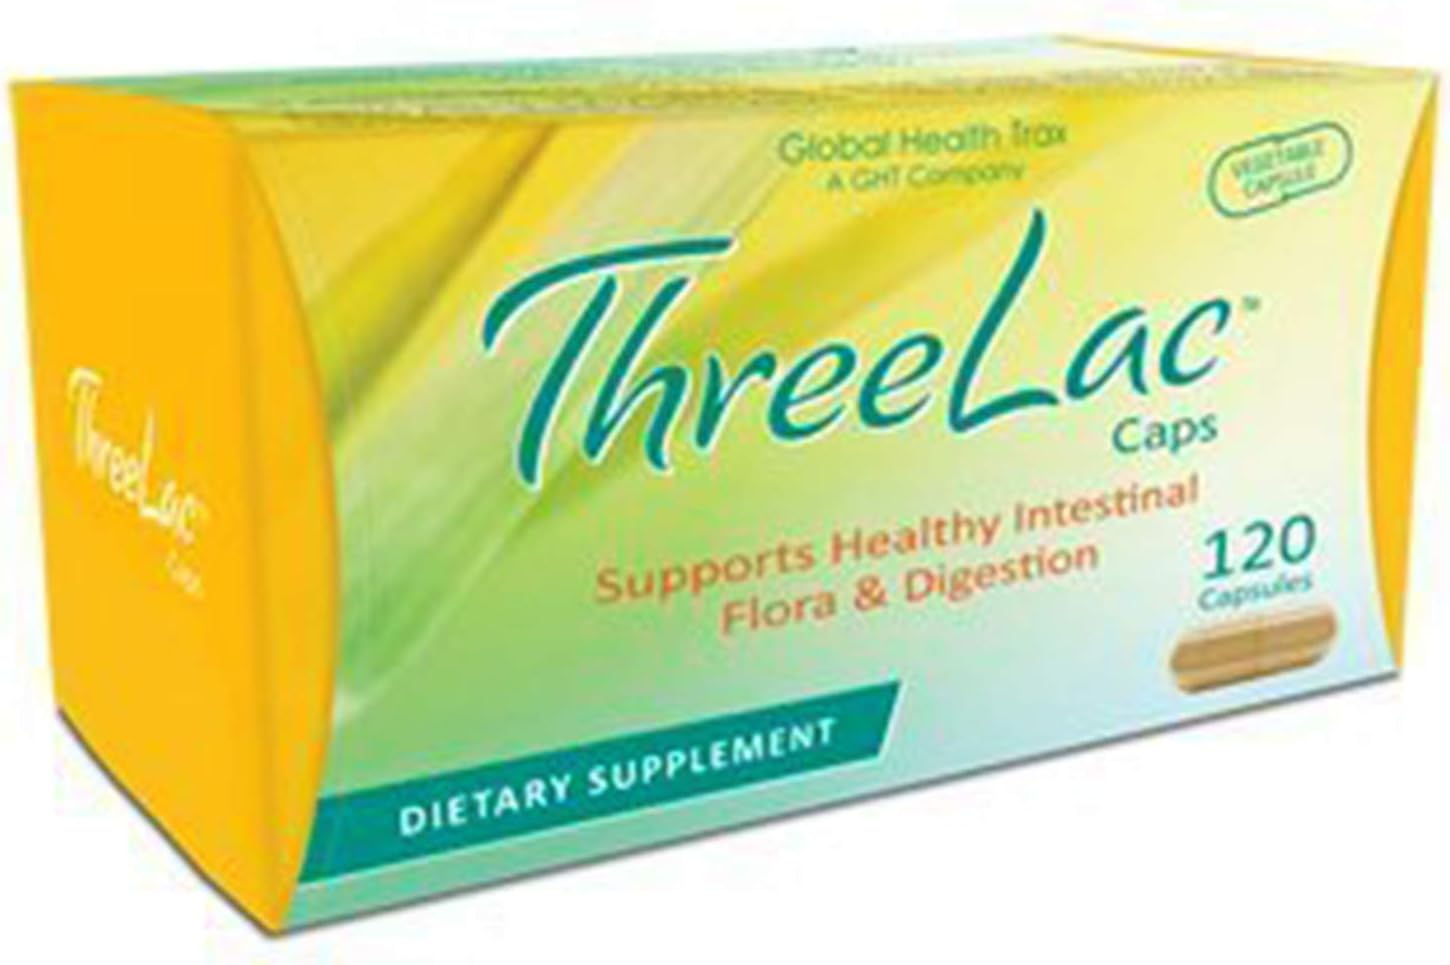 Global Health Trax Threelac Lemon-Flavored Probiotic Support